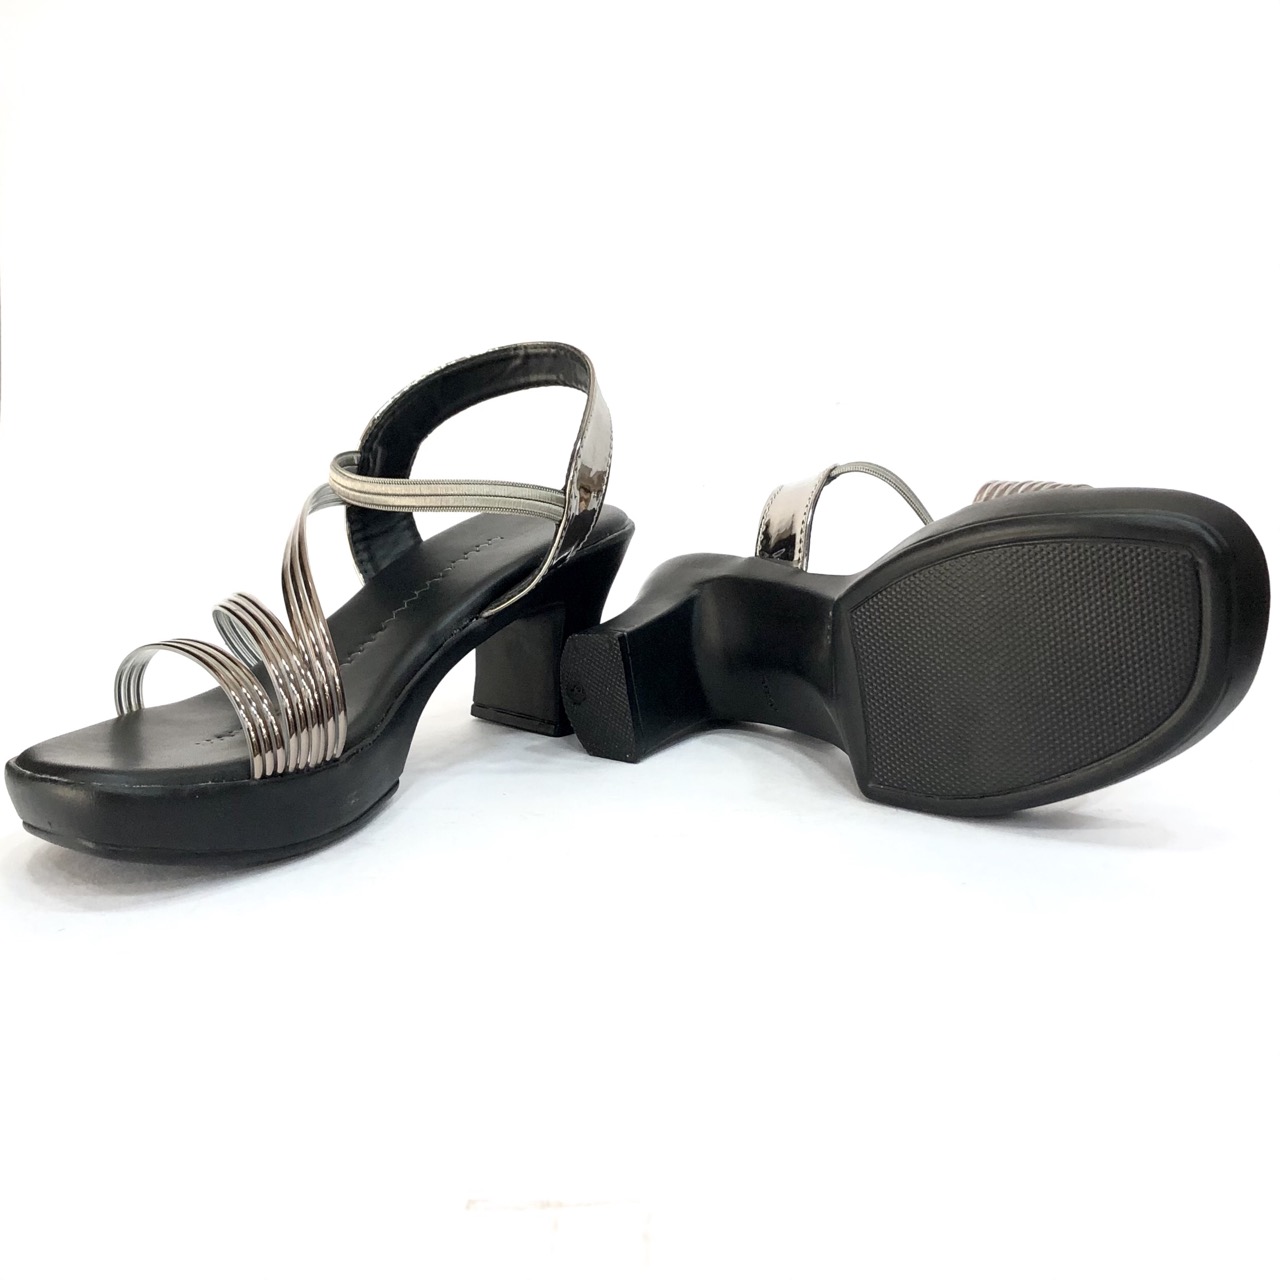 Sandals - Shoes Online Sale Store -US - Leeds Developers